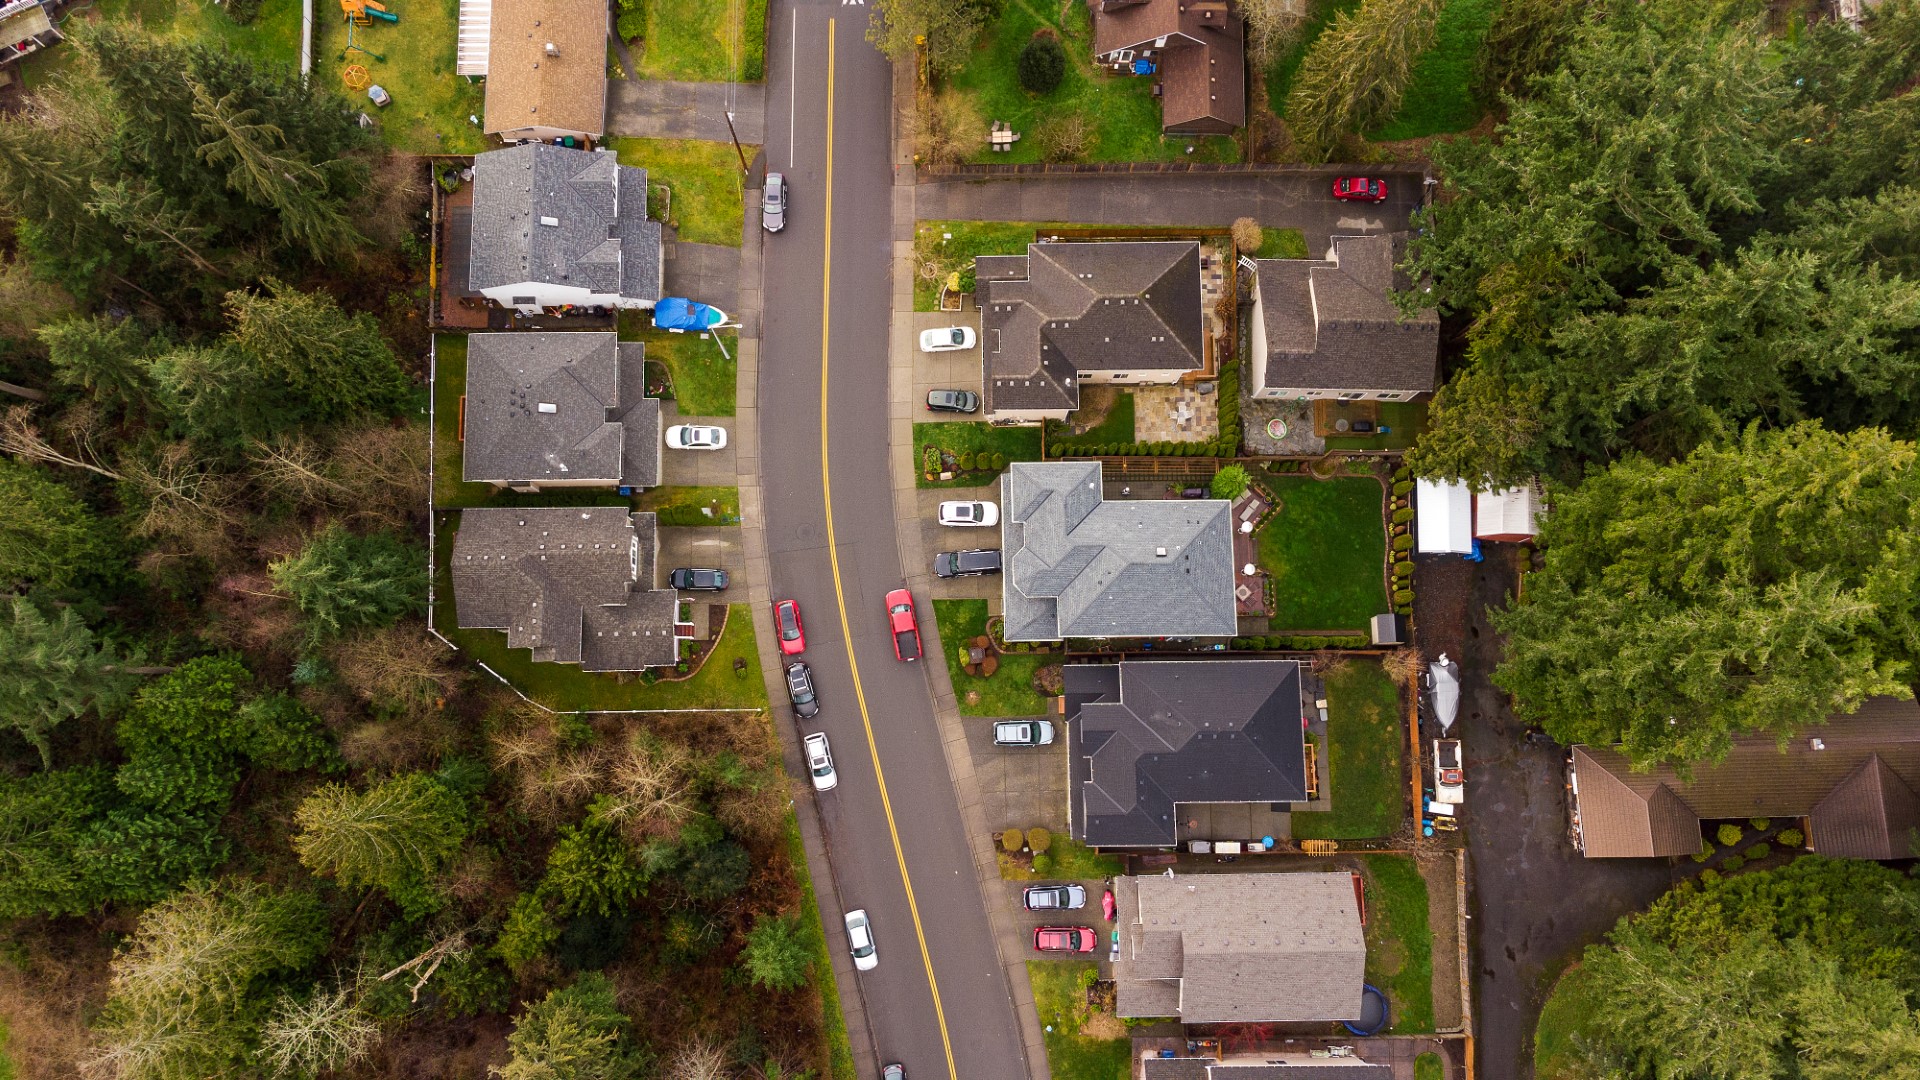 Aerial View Of Suburban Street In Everett Washing 2022 06 14 02 04 09 Utc